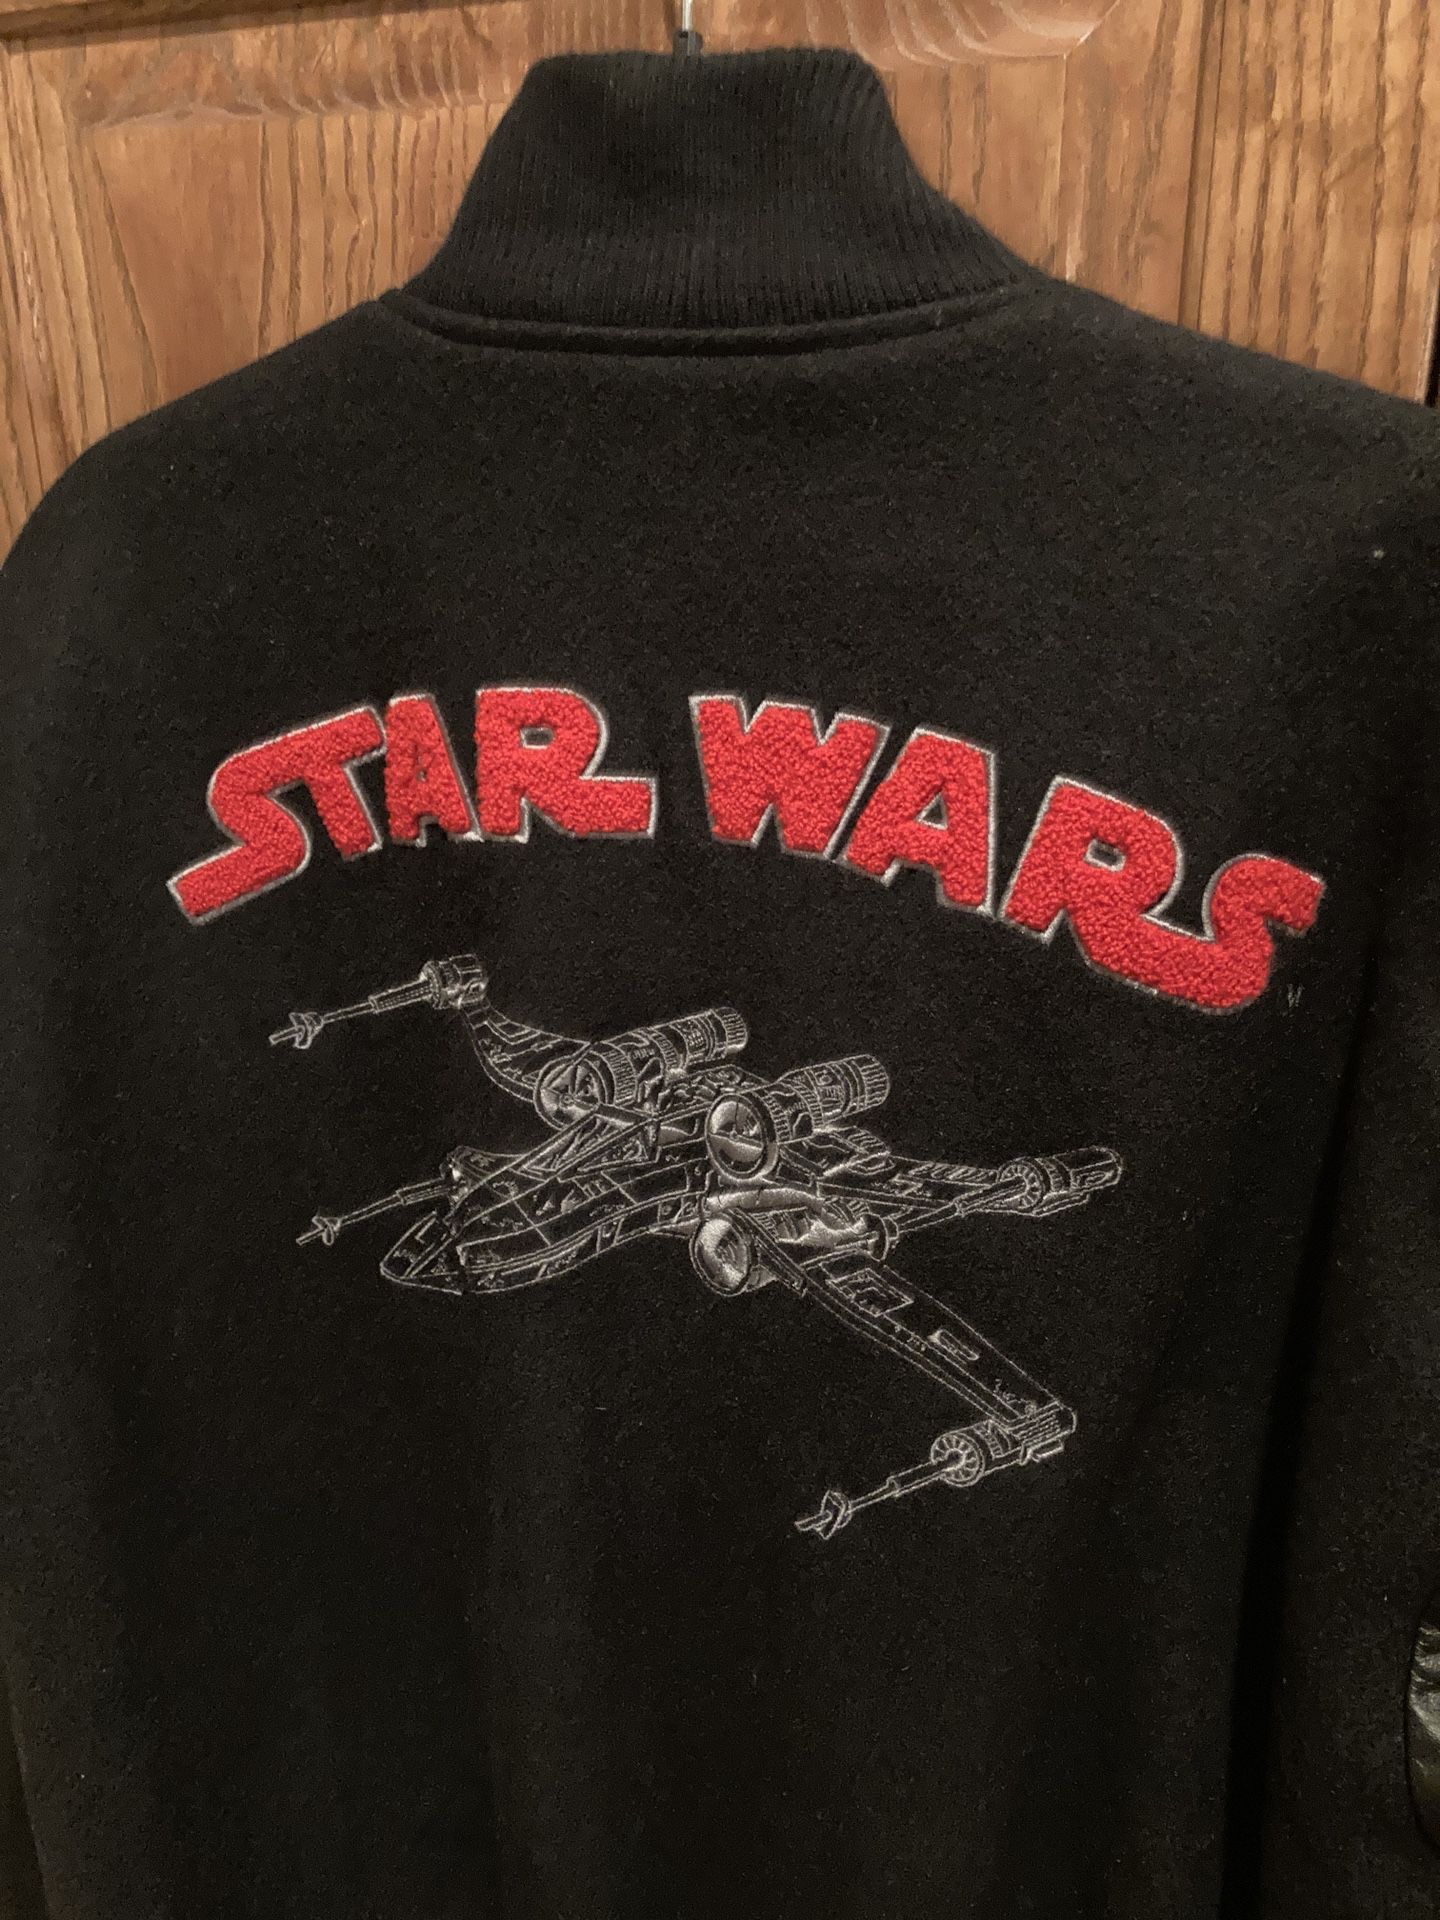 Star Wars leather jacket (size: XL/TG)